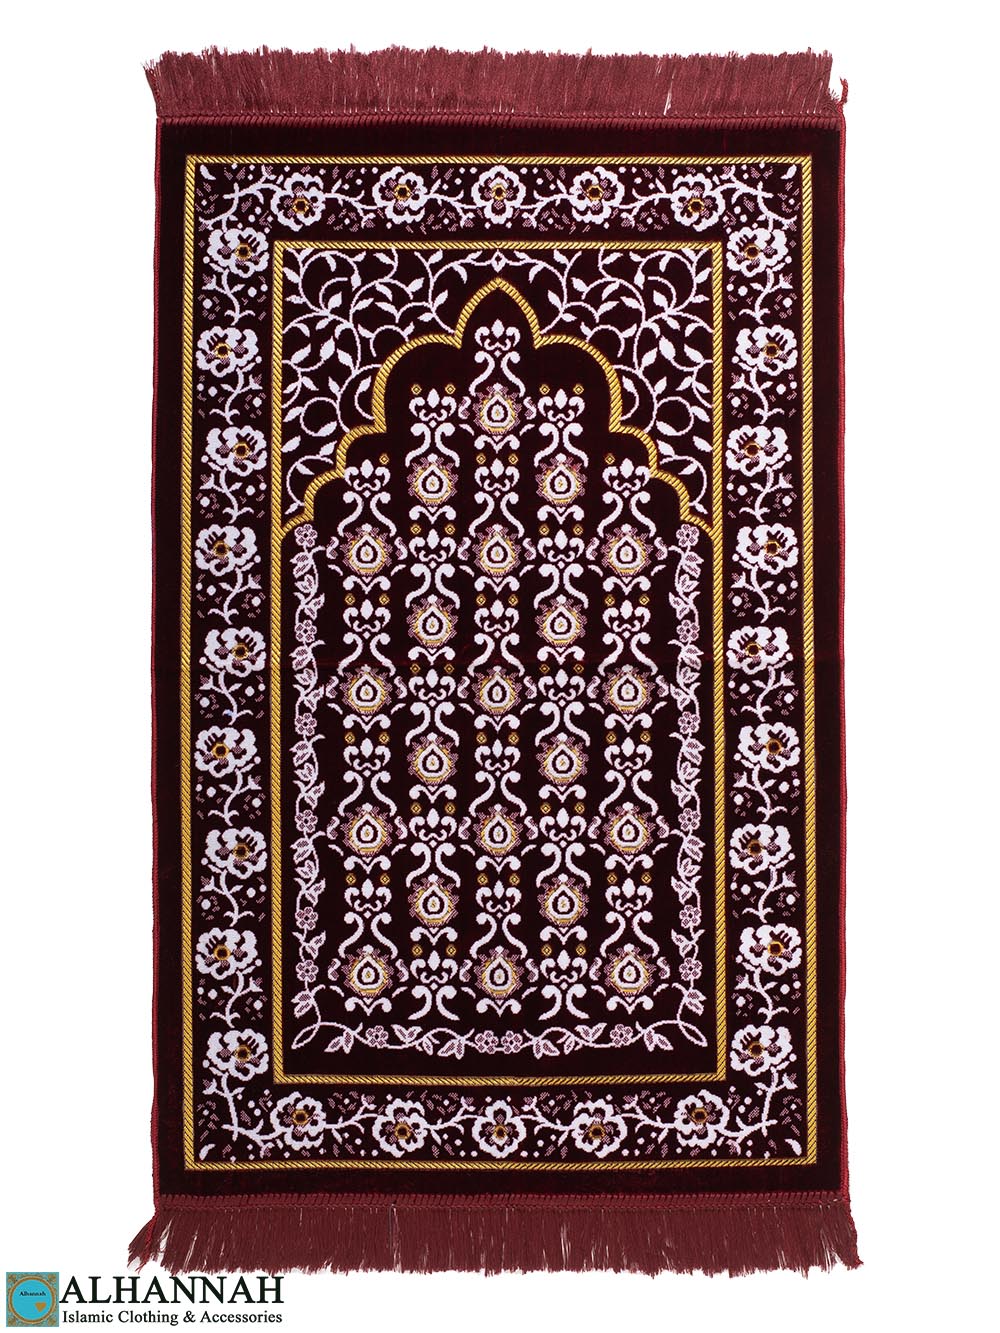 Islamic Prayer Rug in Classic Floral Pattern - Maroon ii1502